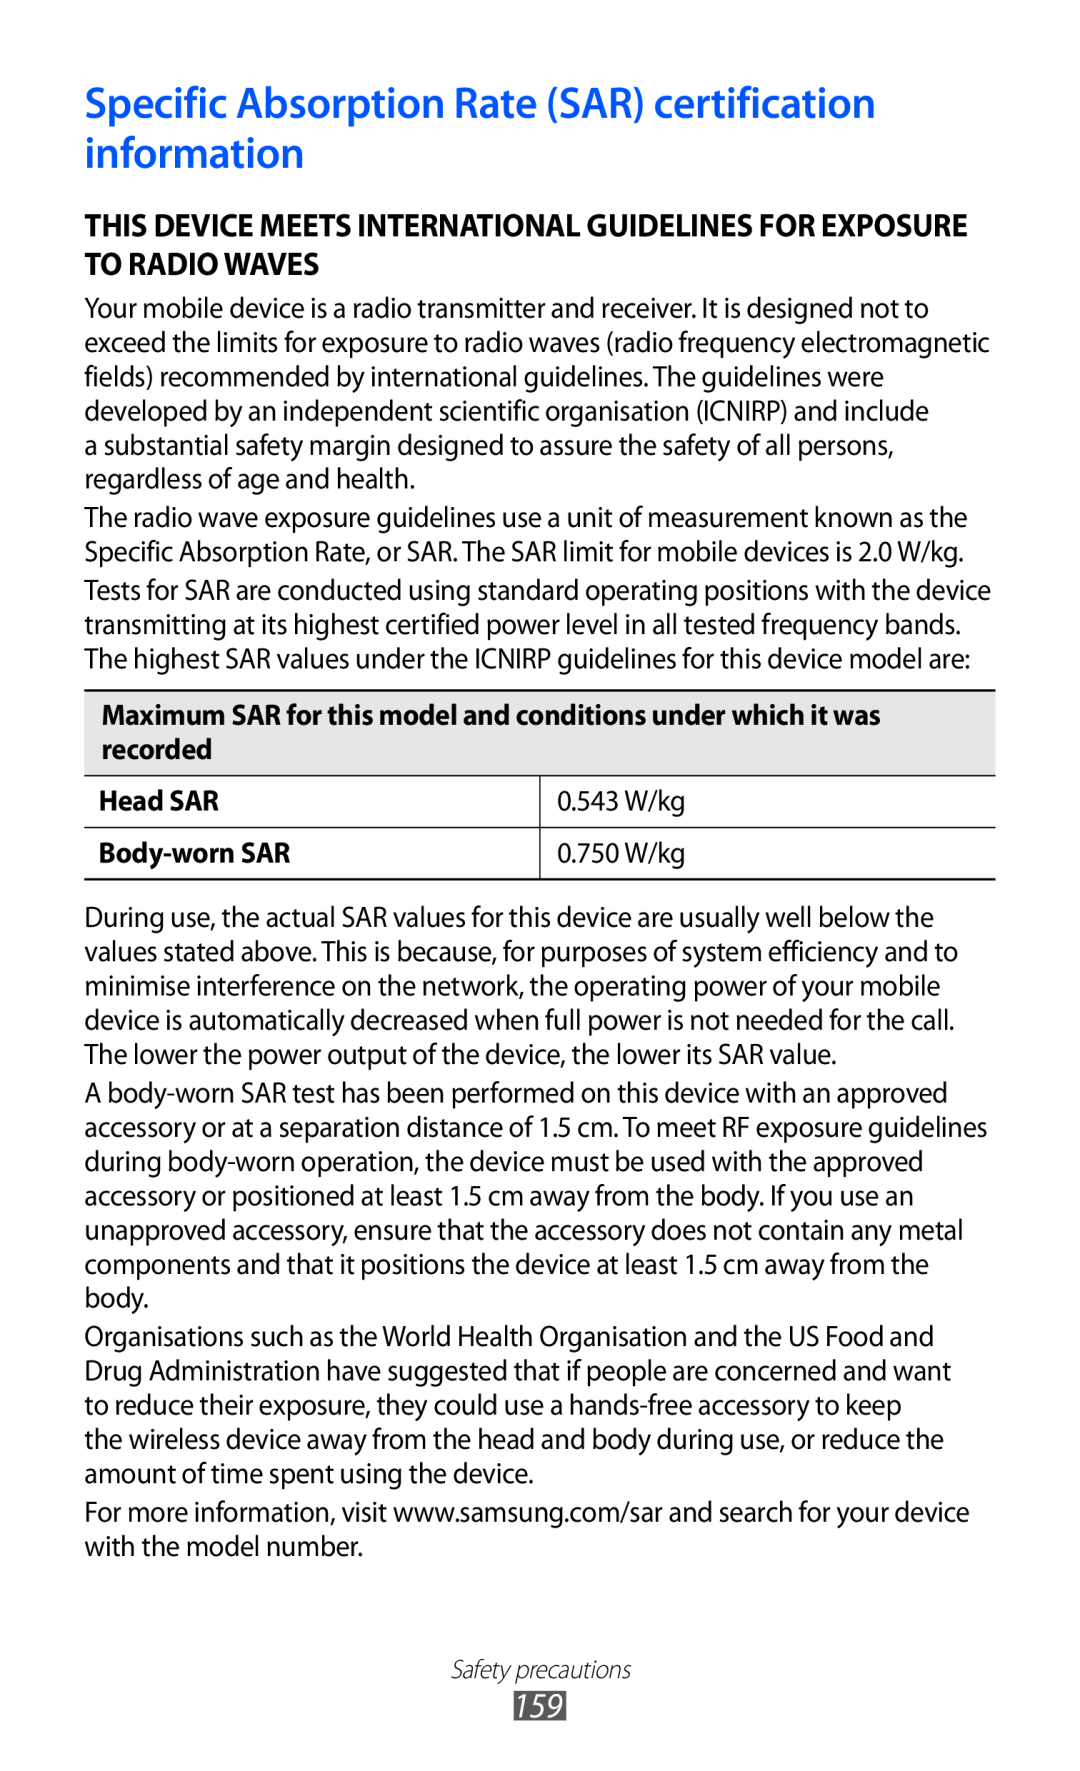 Samsung GT-I9070 Specific Absorption Rate SAR certification information, Head SAR, 0.543 W/kg, Body-worn SAR, 0.750 W/kg 